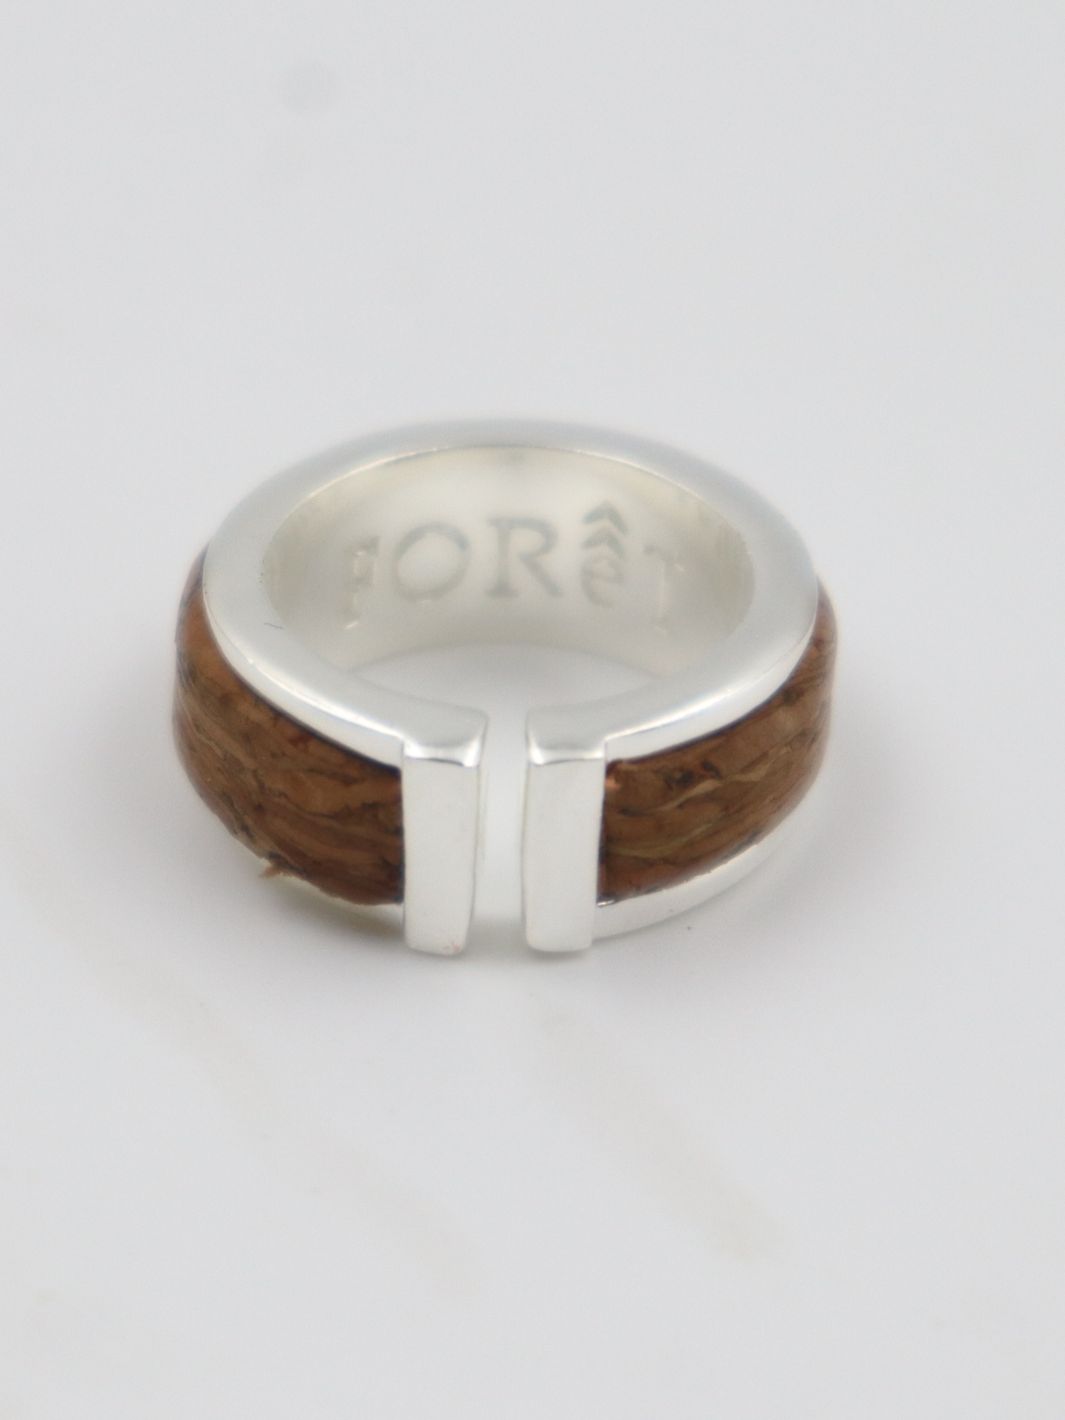 Spotted on Radhika Madan: FOReT Cork Bark Band Ring